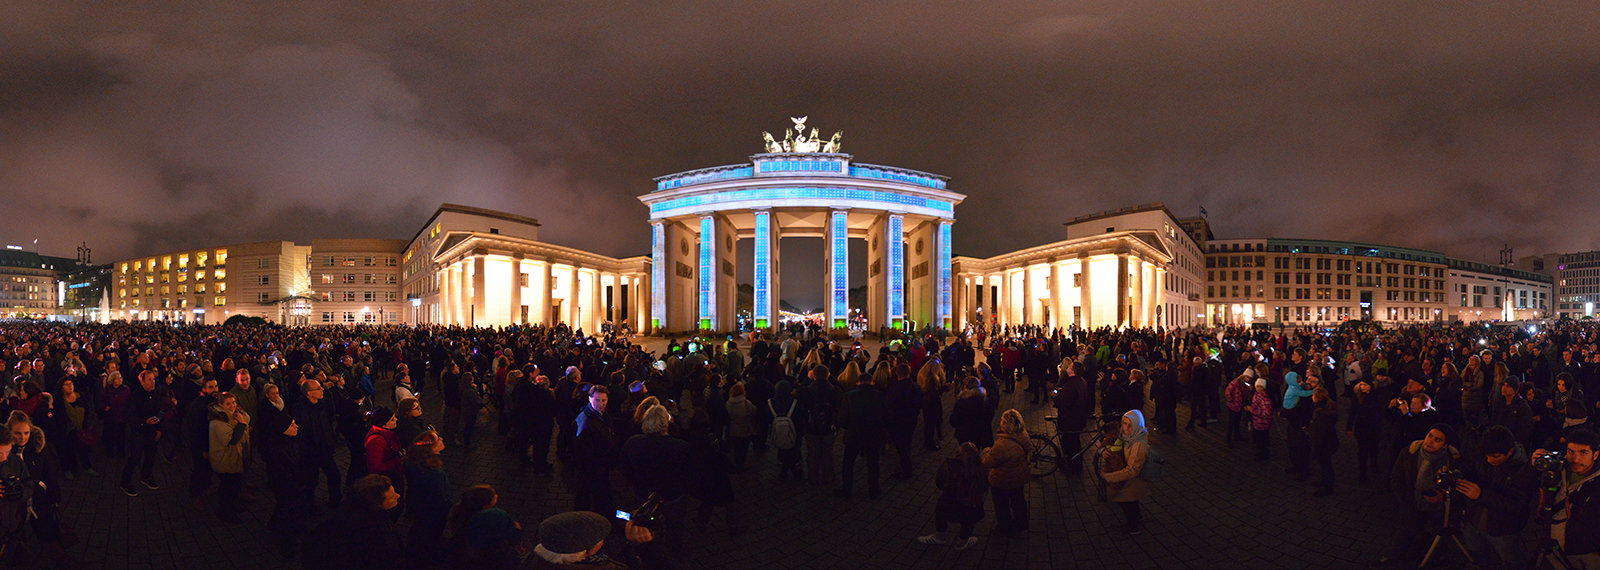 Festival of Lights, Brandenburg, Berlin - Virtual tour